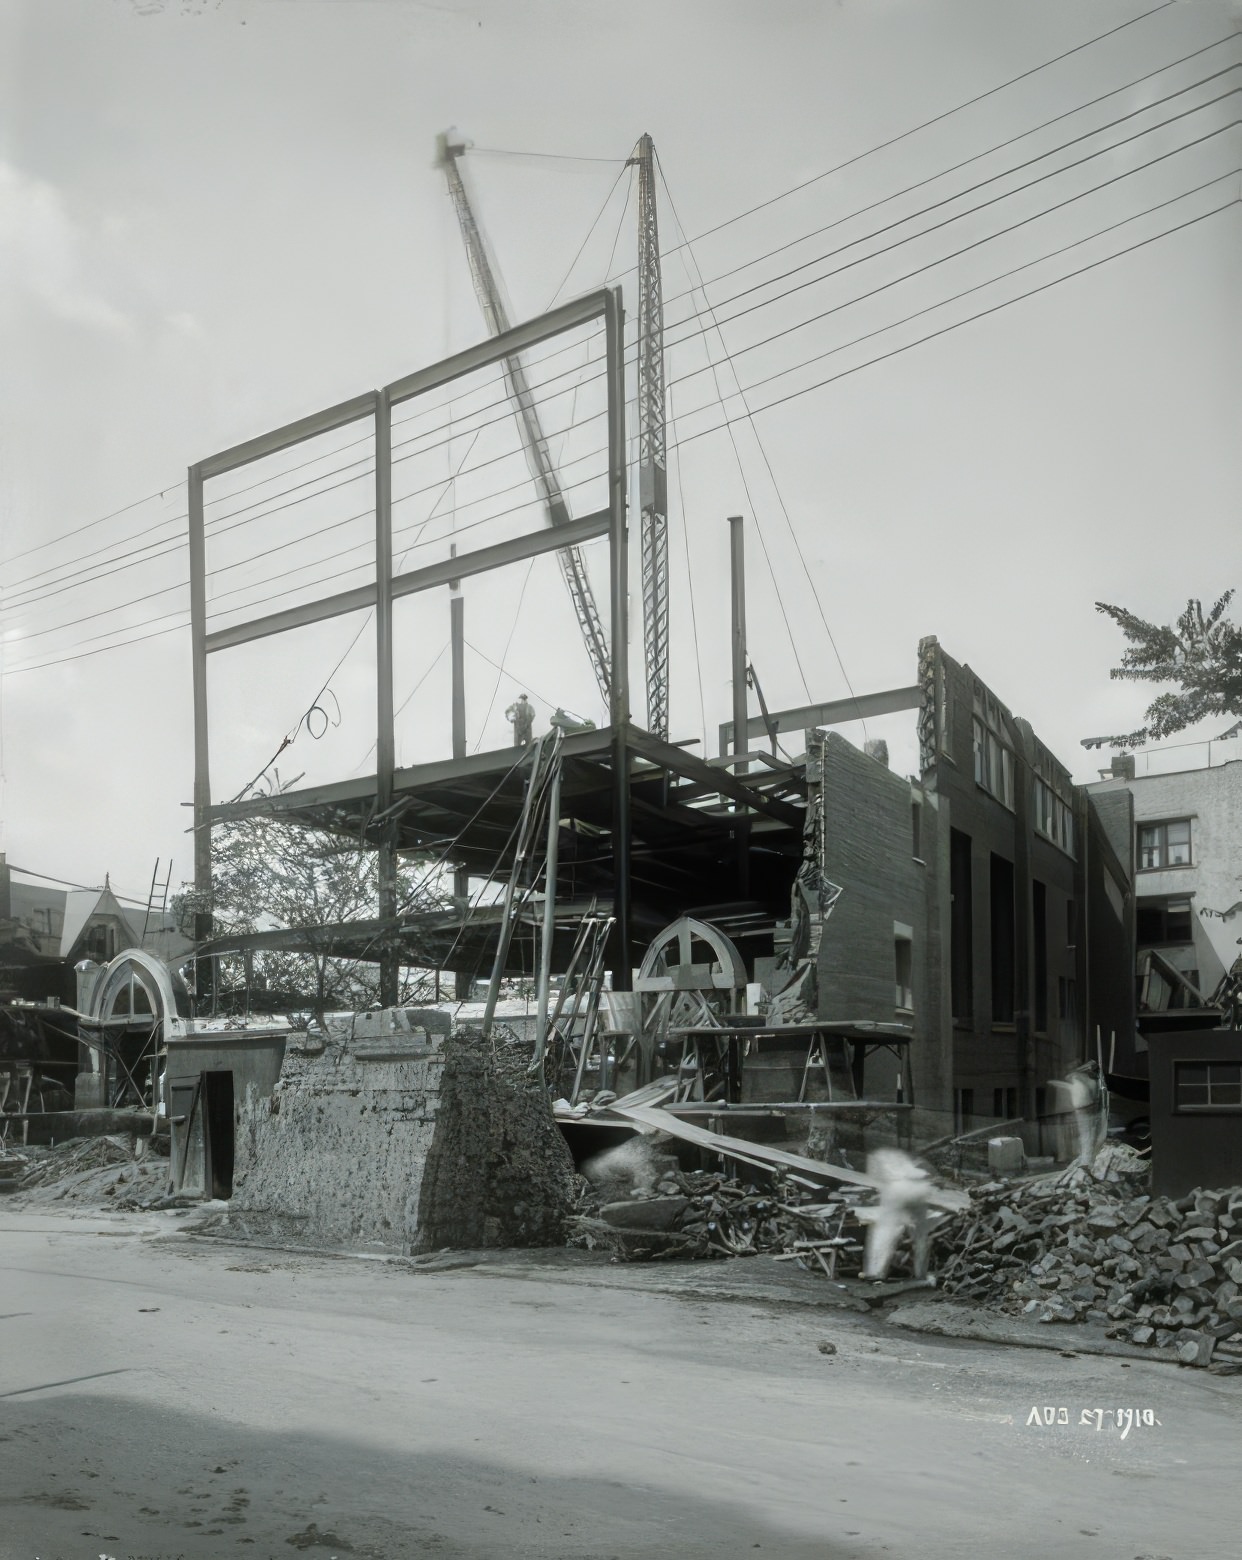 183Rd Street And Washington Avenue, Parochial School, Construction, August 1914.